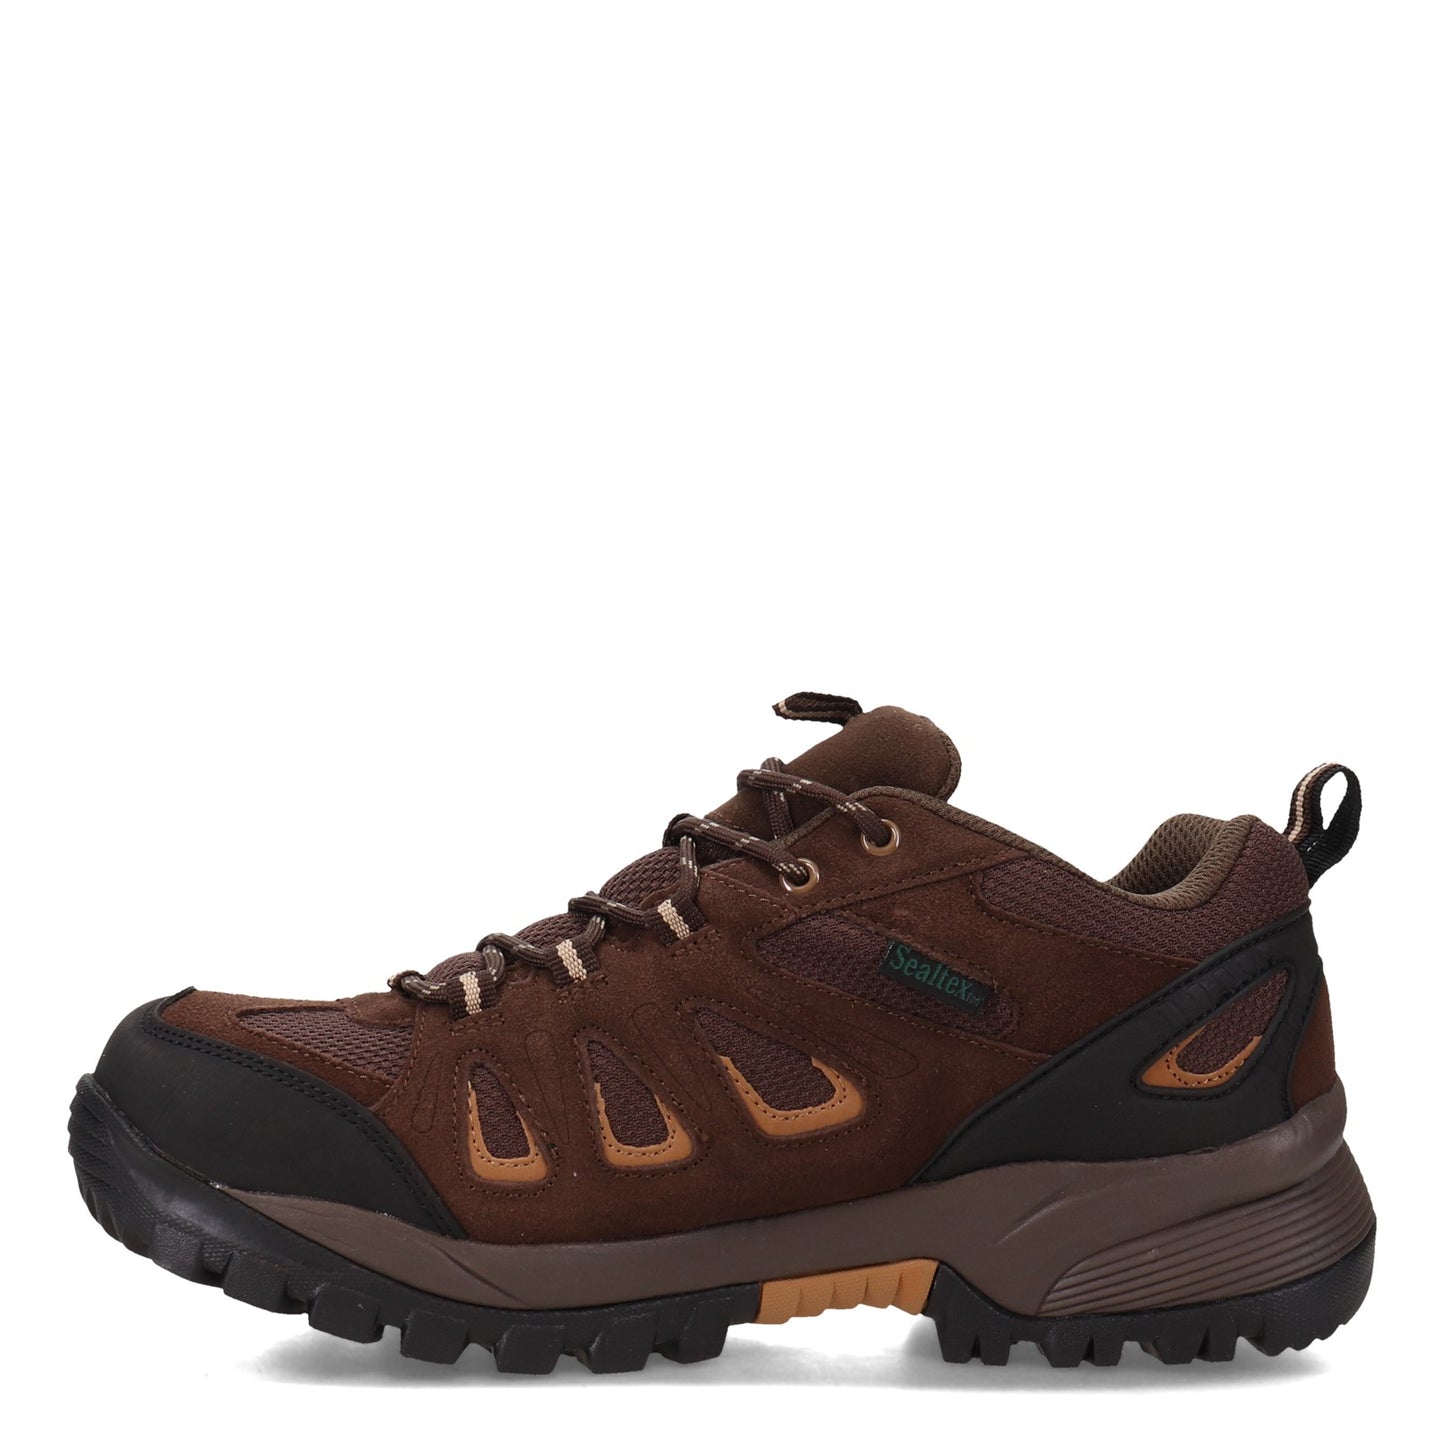 Peltz Shoes  Men's Propet Ridgewalker Low Hiking Shoe BROWN M3598-BR